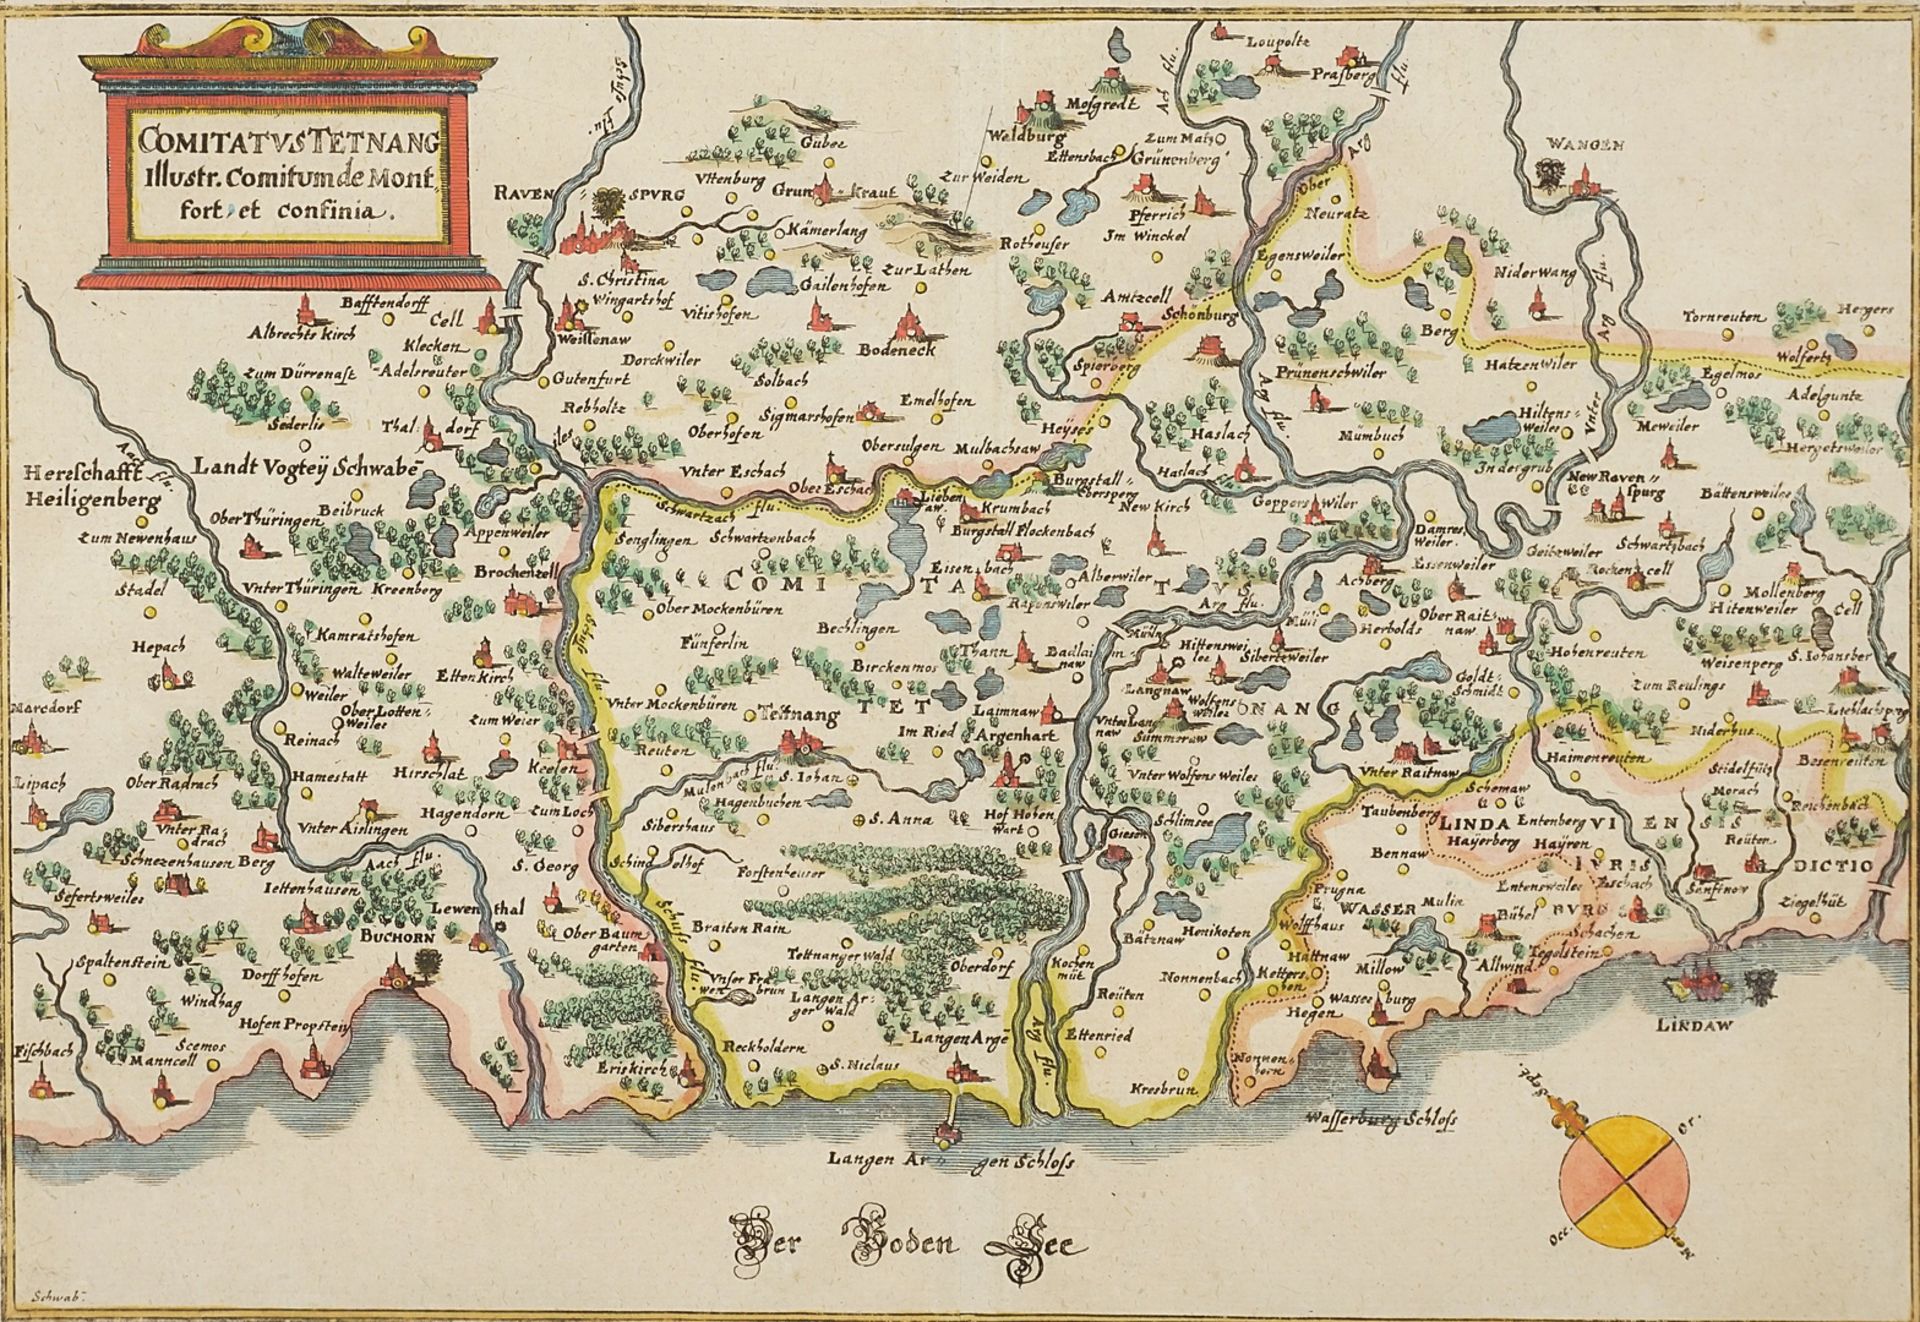 Matthäus Merian (1593-1650), "Comitatus Tetnang" (Map of the County of Tettnang)